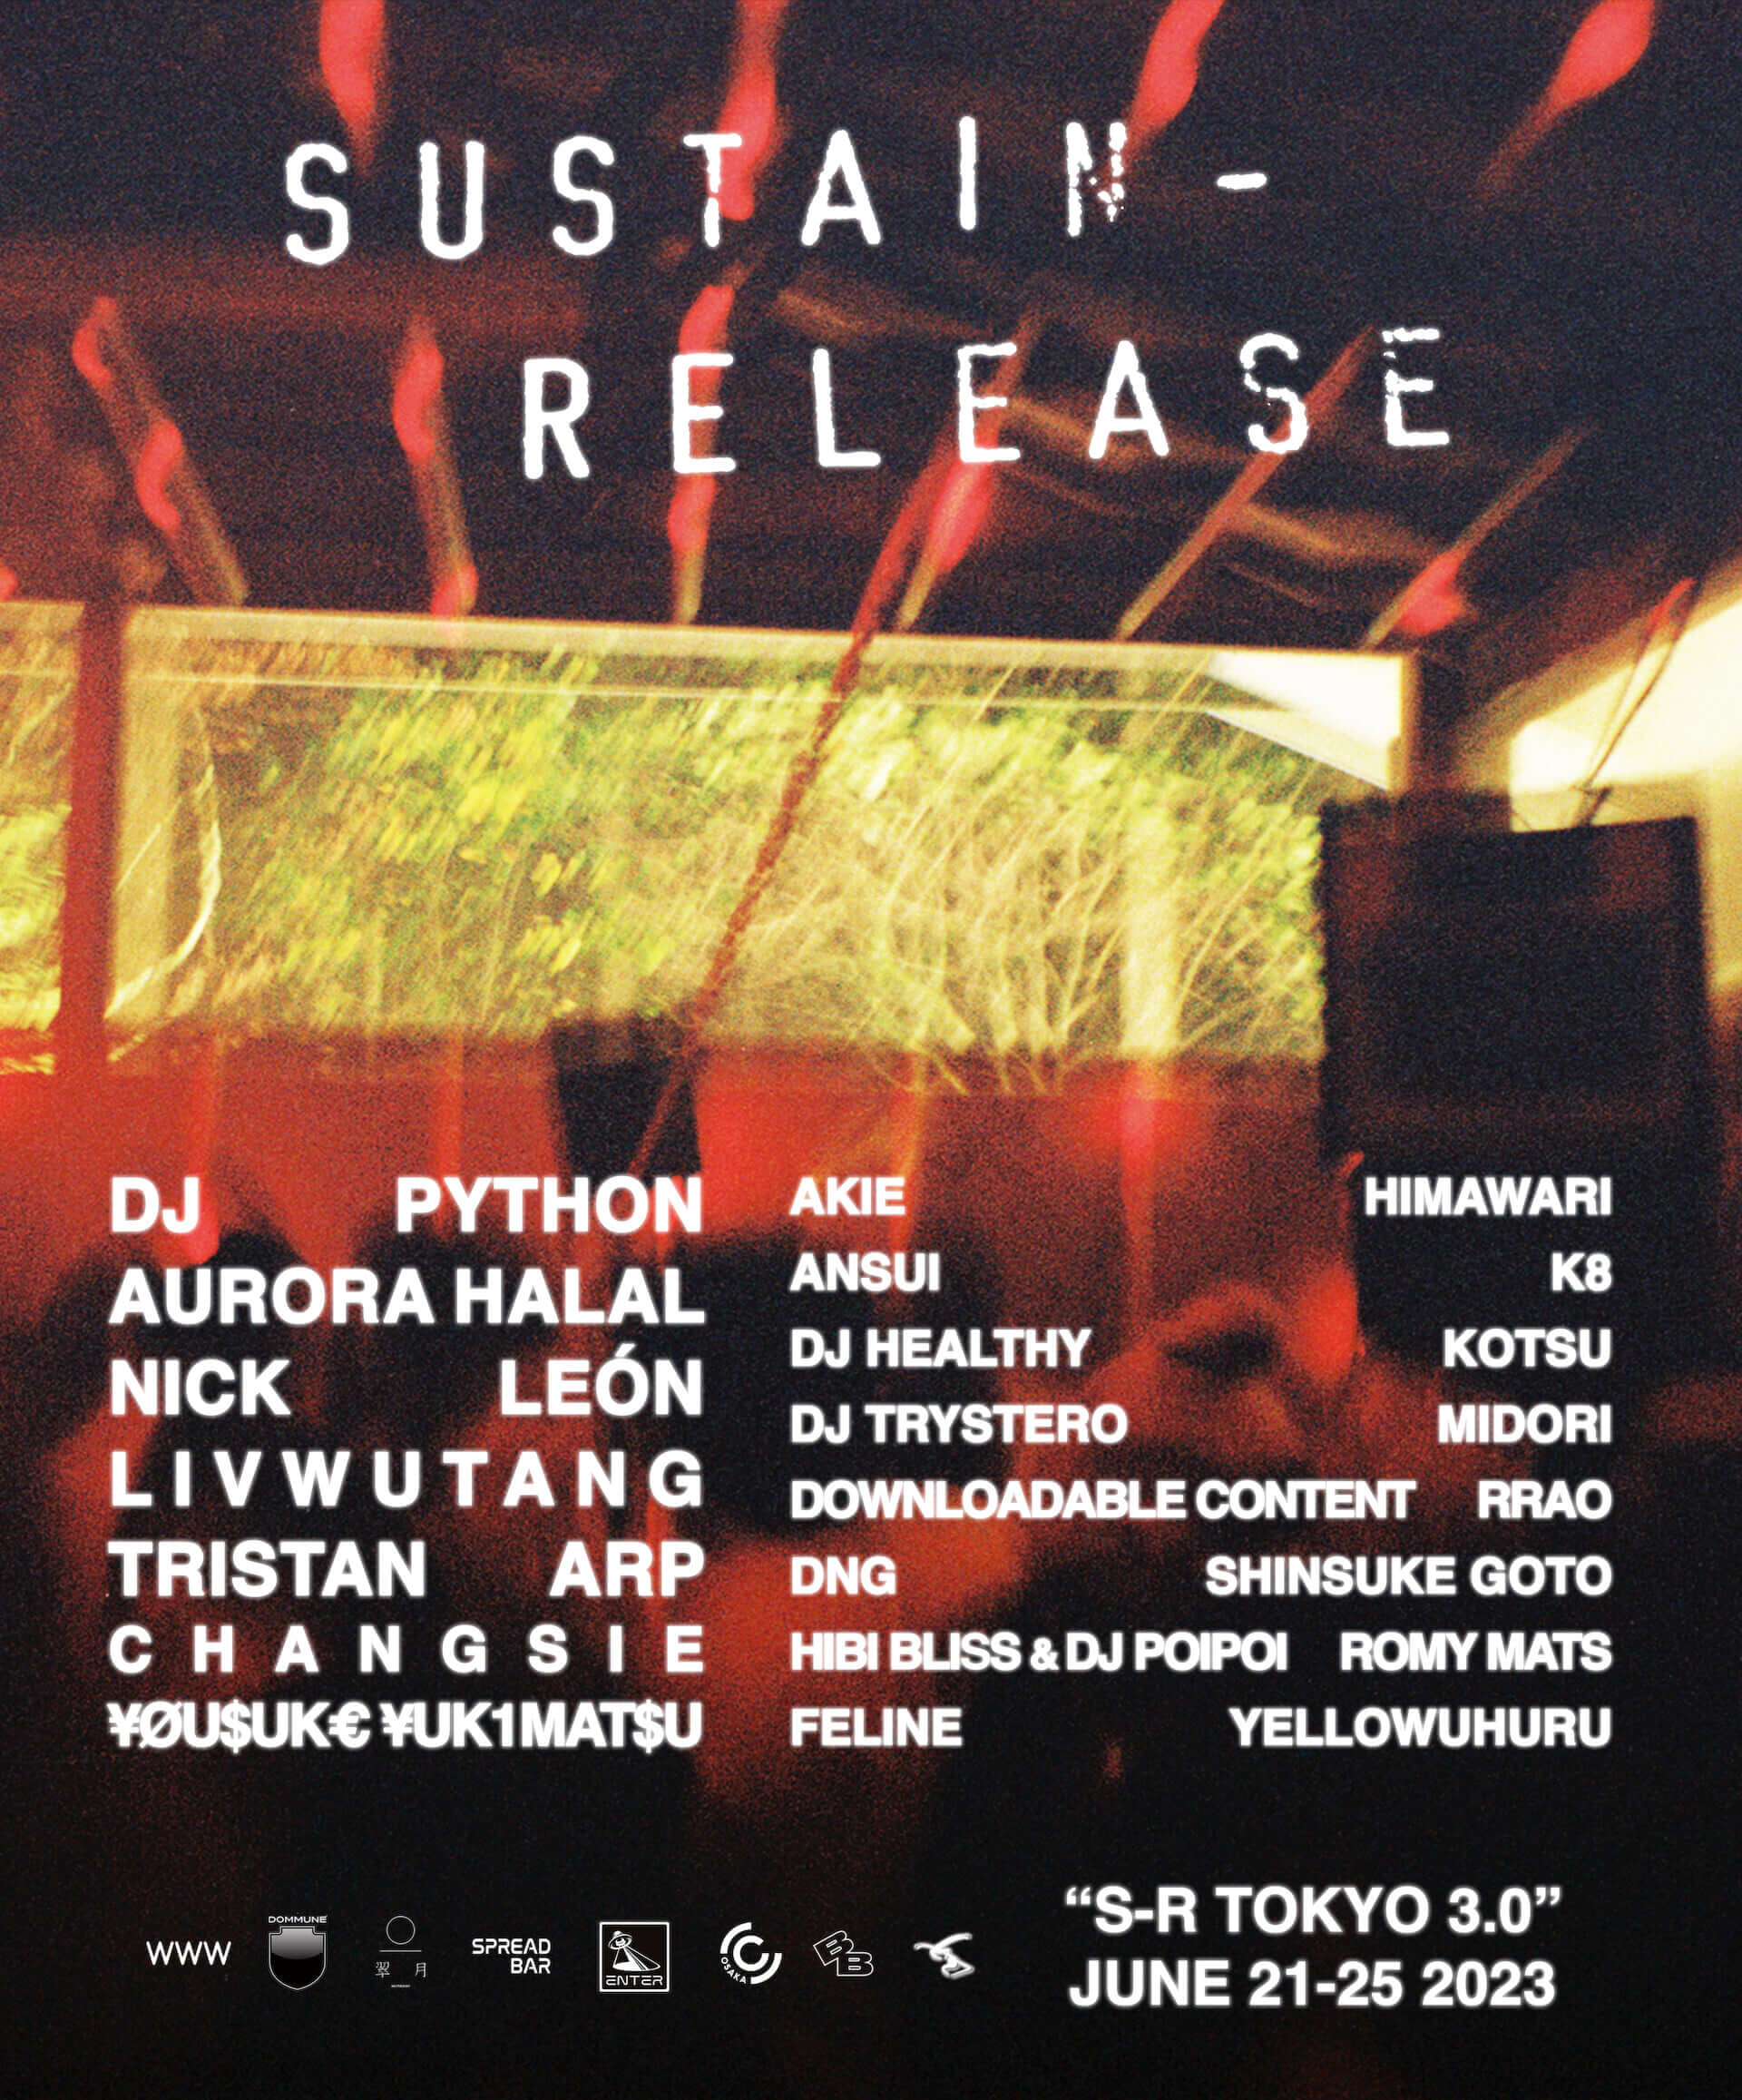 Sustain-Release presents “S-R Tokyo 3.0”